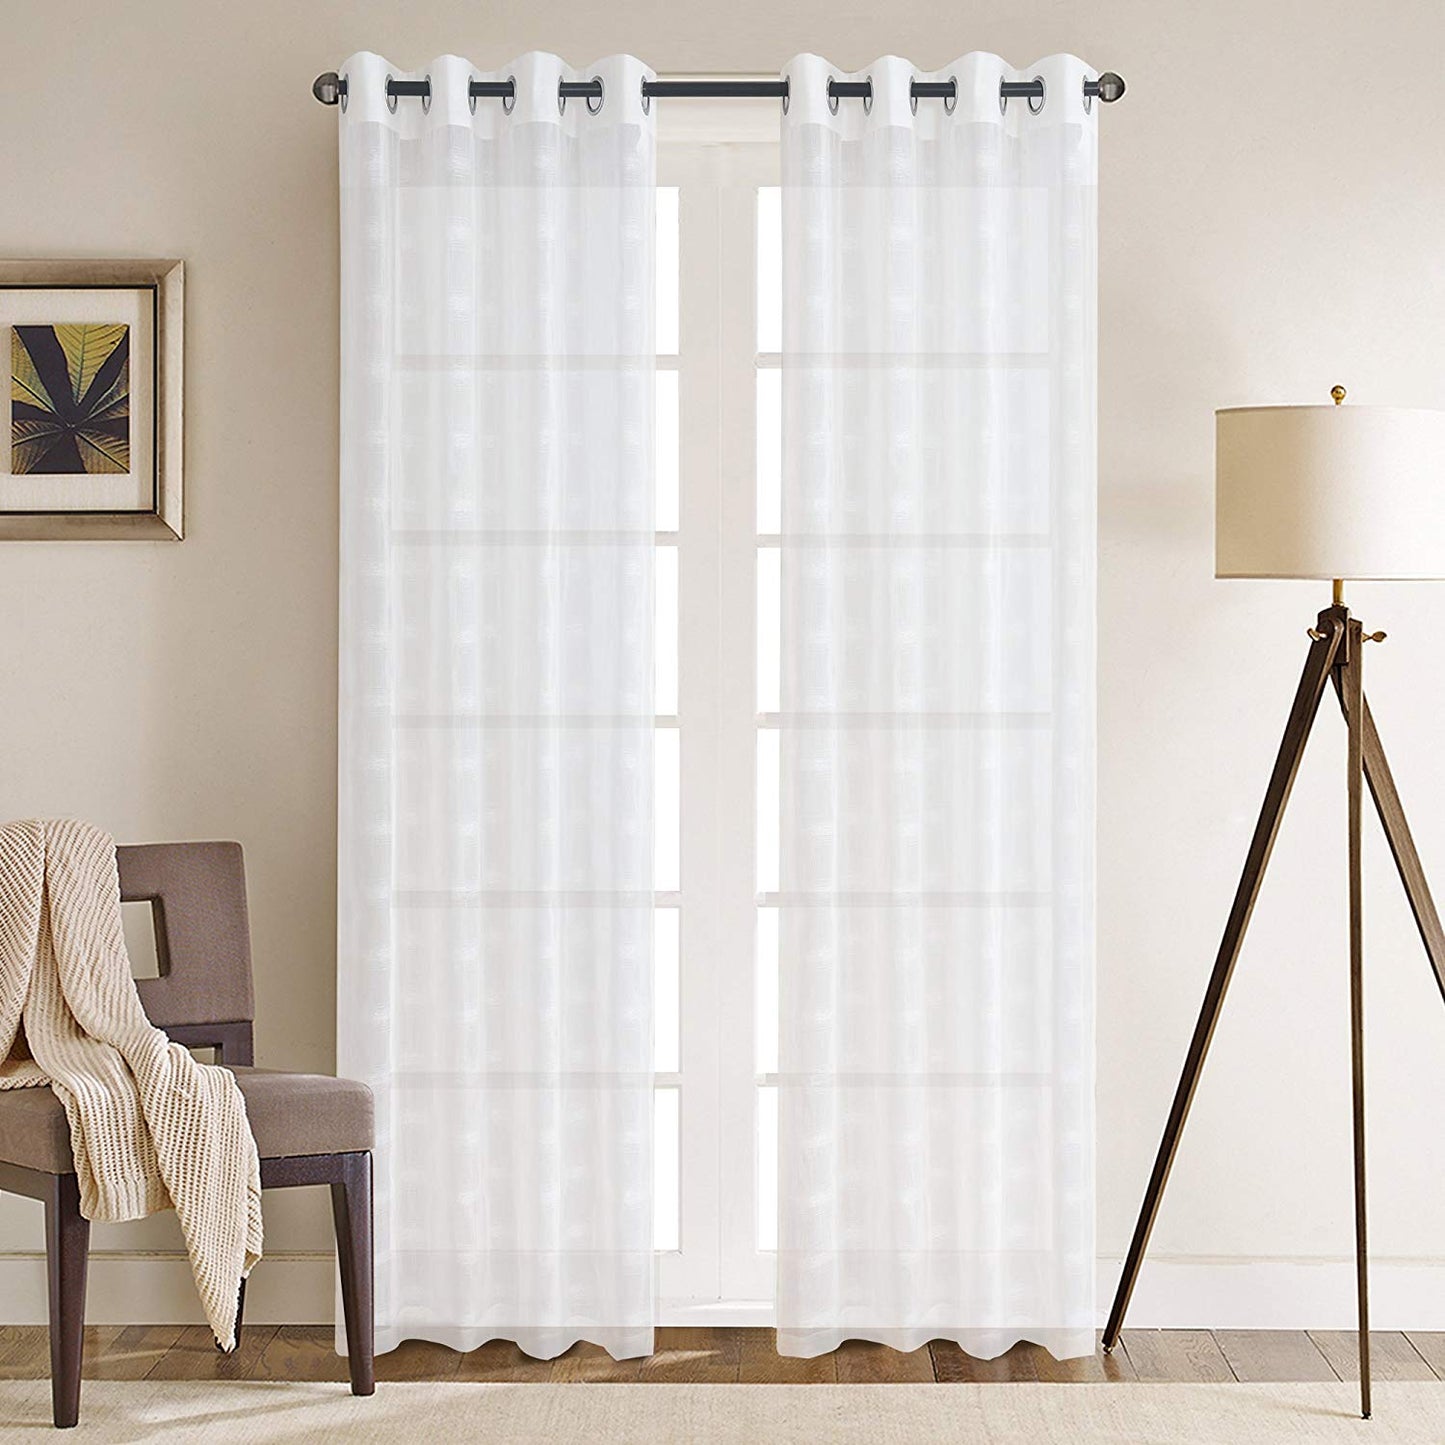 Gyrohomestore Window Sheer Grommet Curtain Panels Cheap